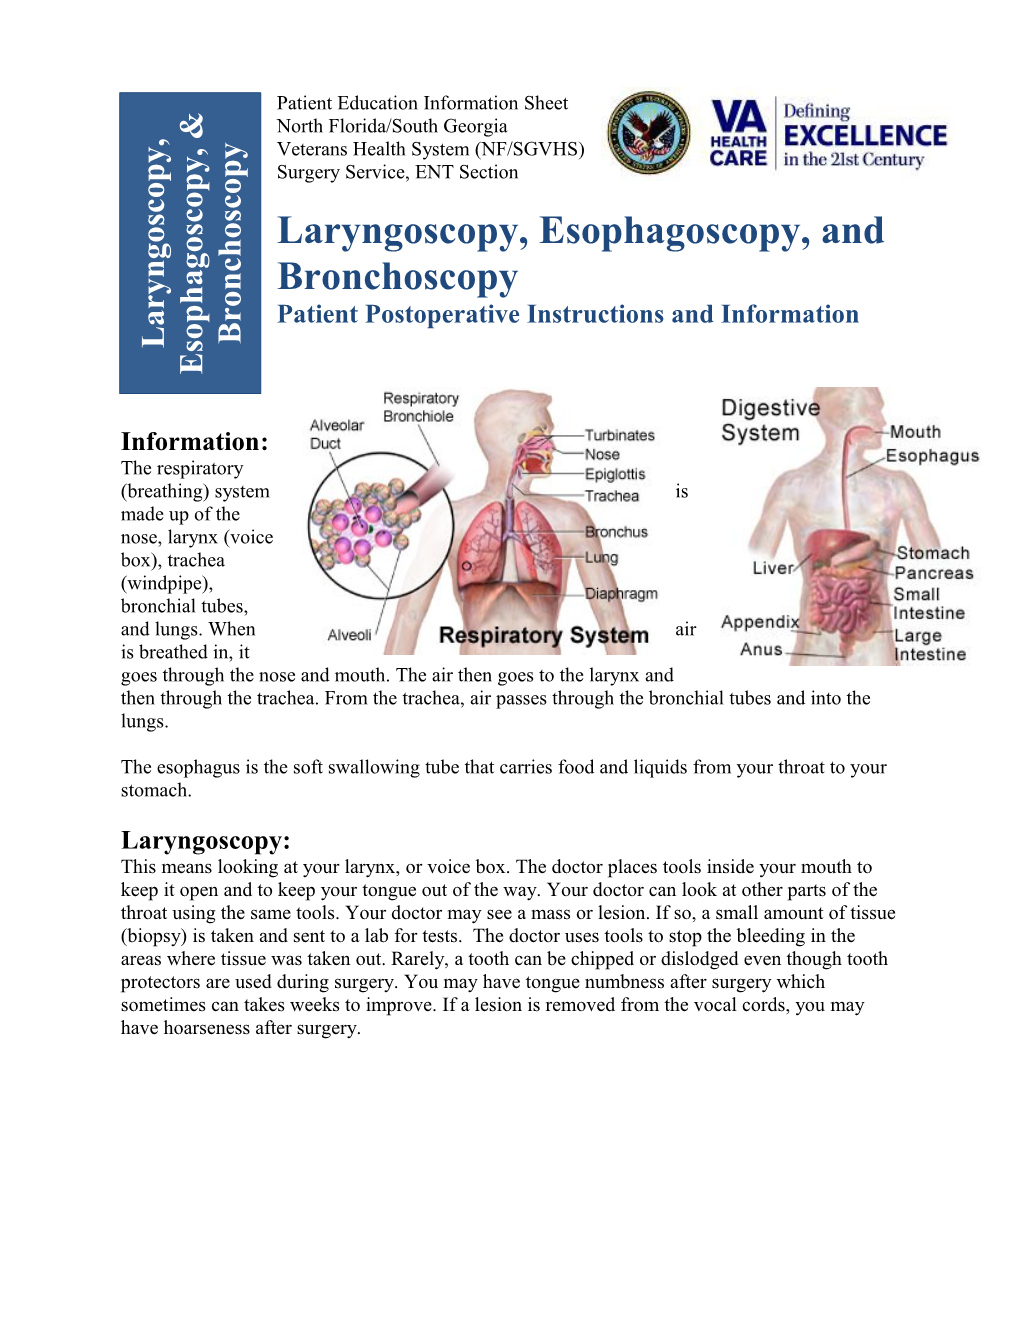 Laryngoscopy, Esophagoscopy, and Bronchoscopy- Patient Postoperative Instructions And